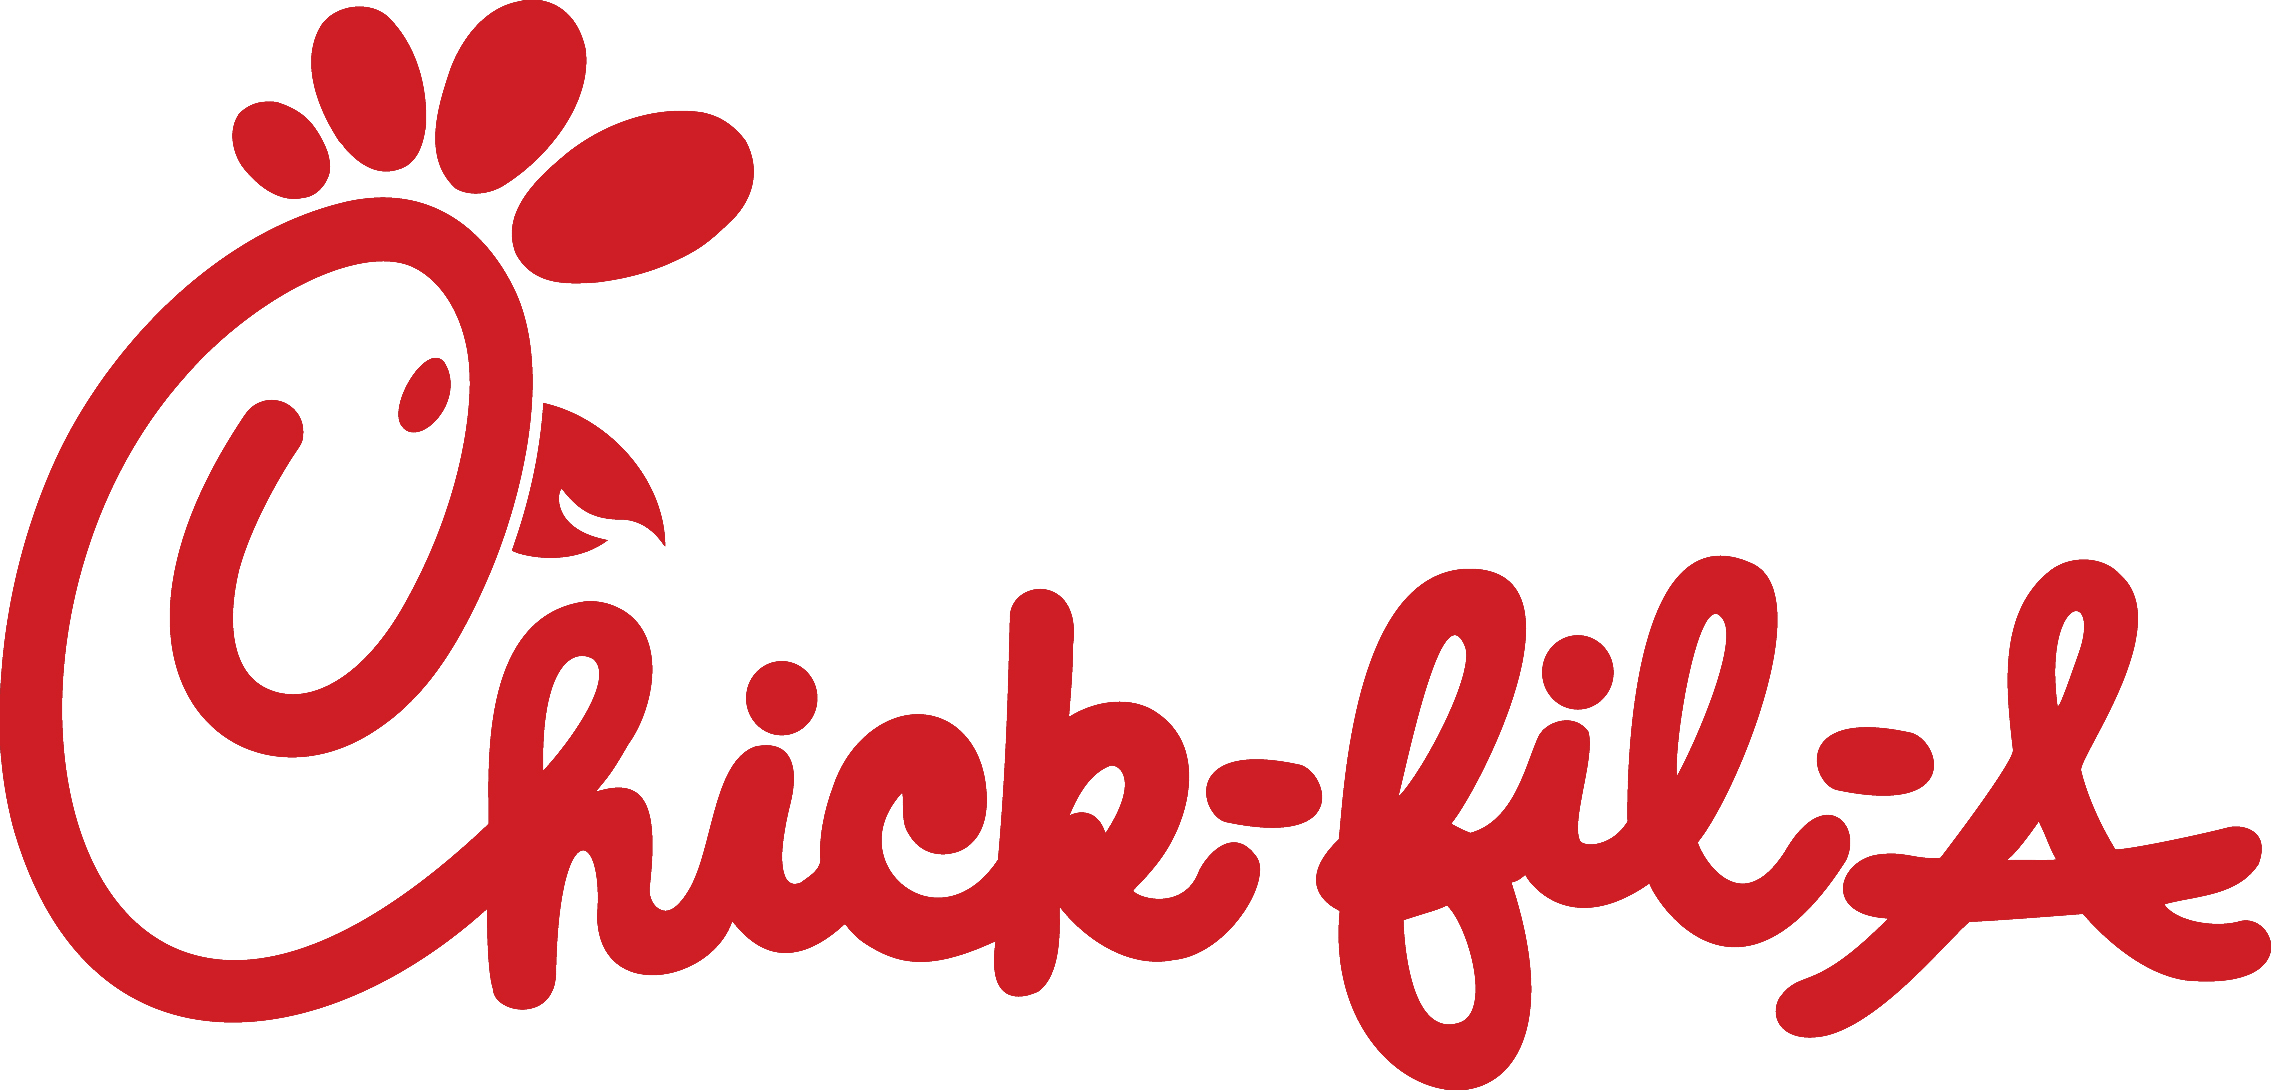 Chick Fil A - Chick Fil A Logo (2271x1090)